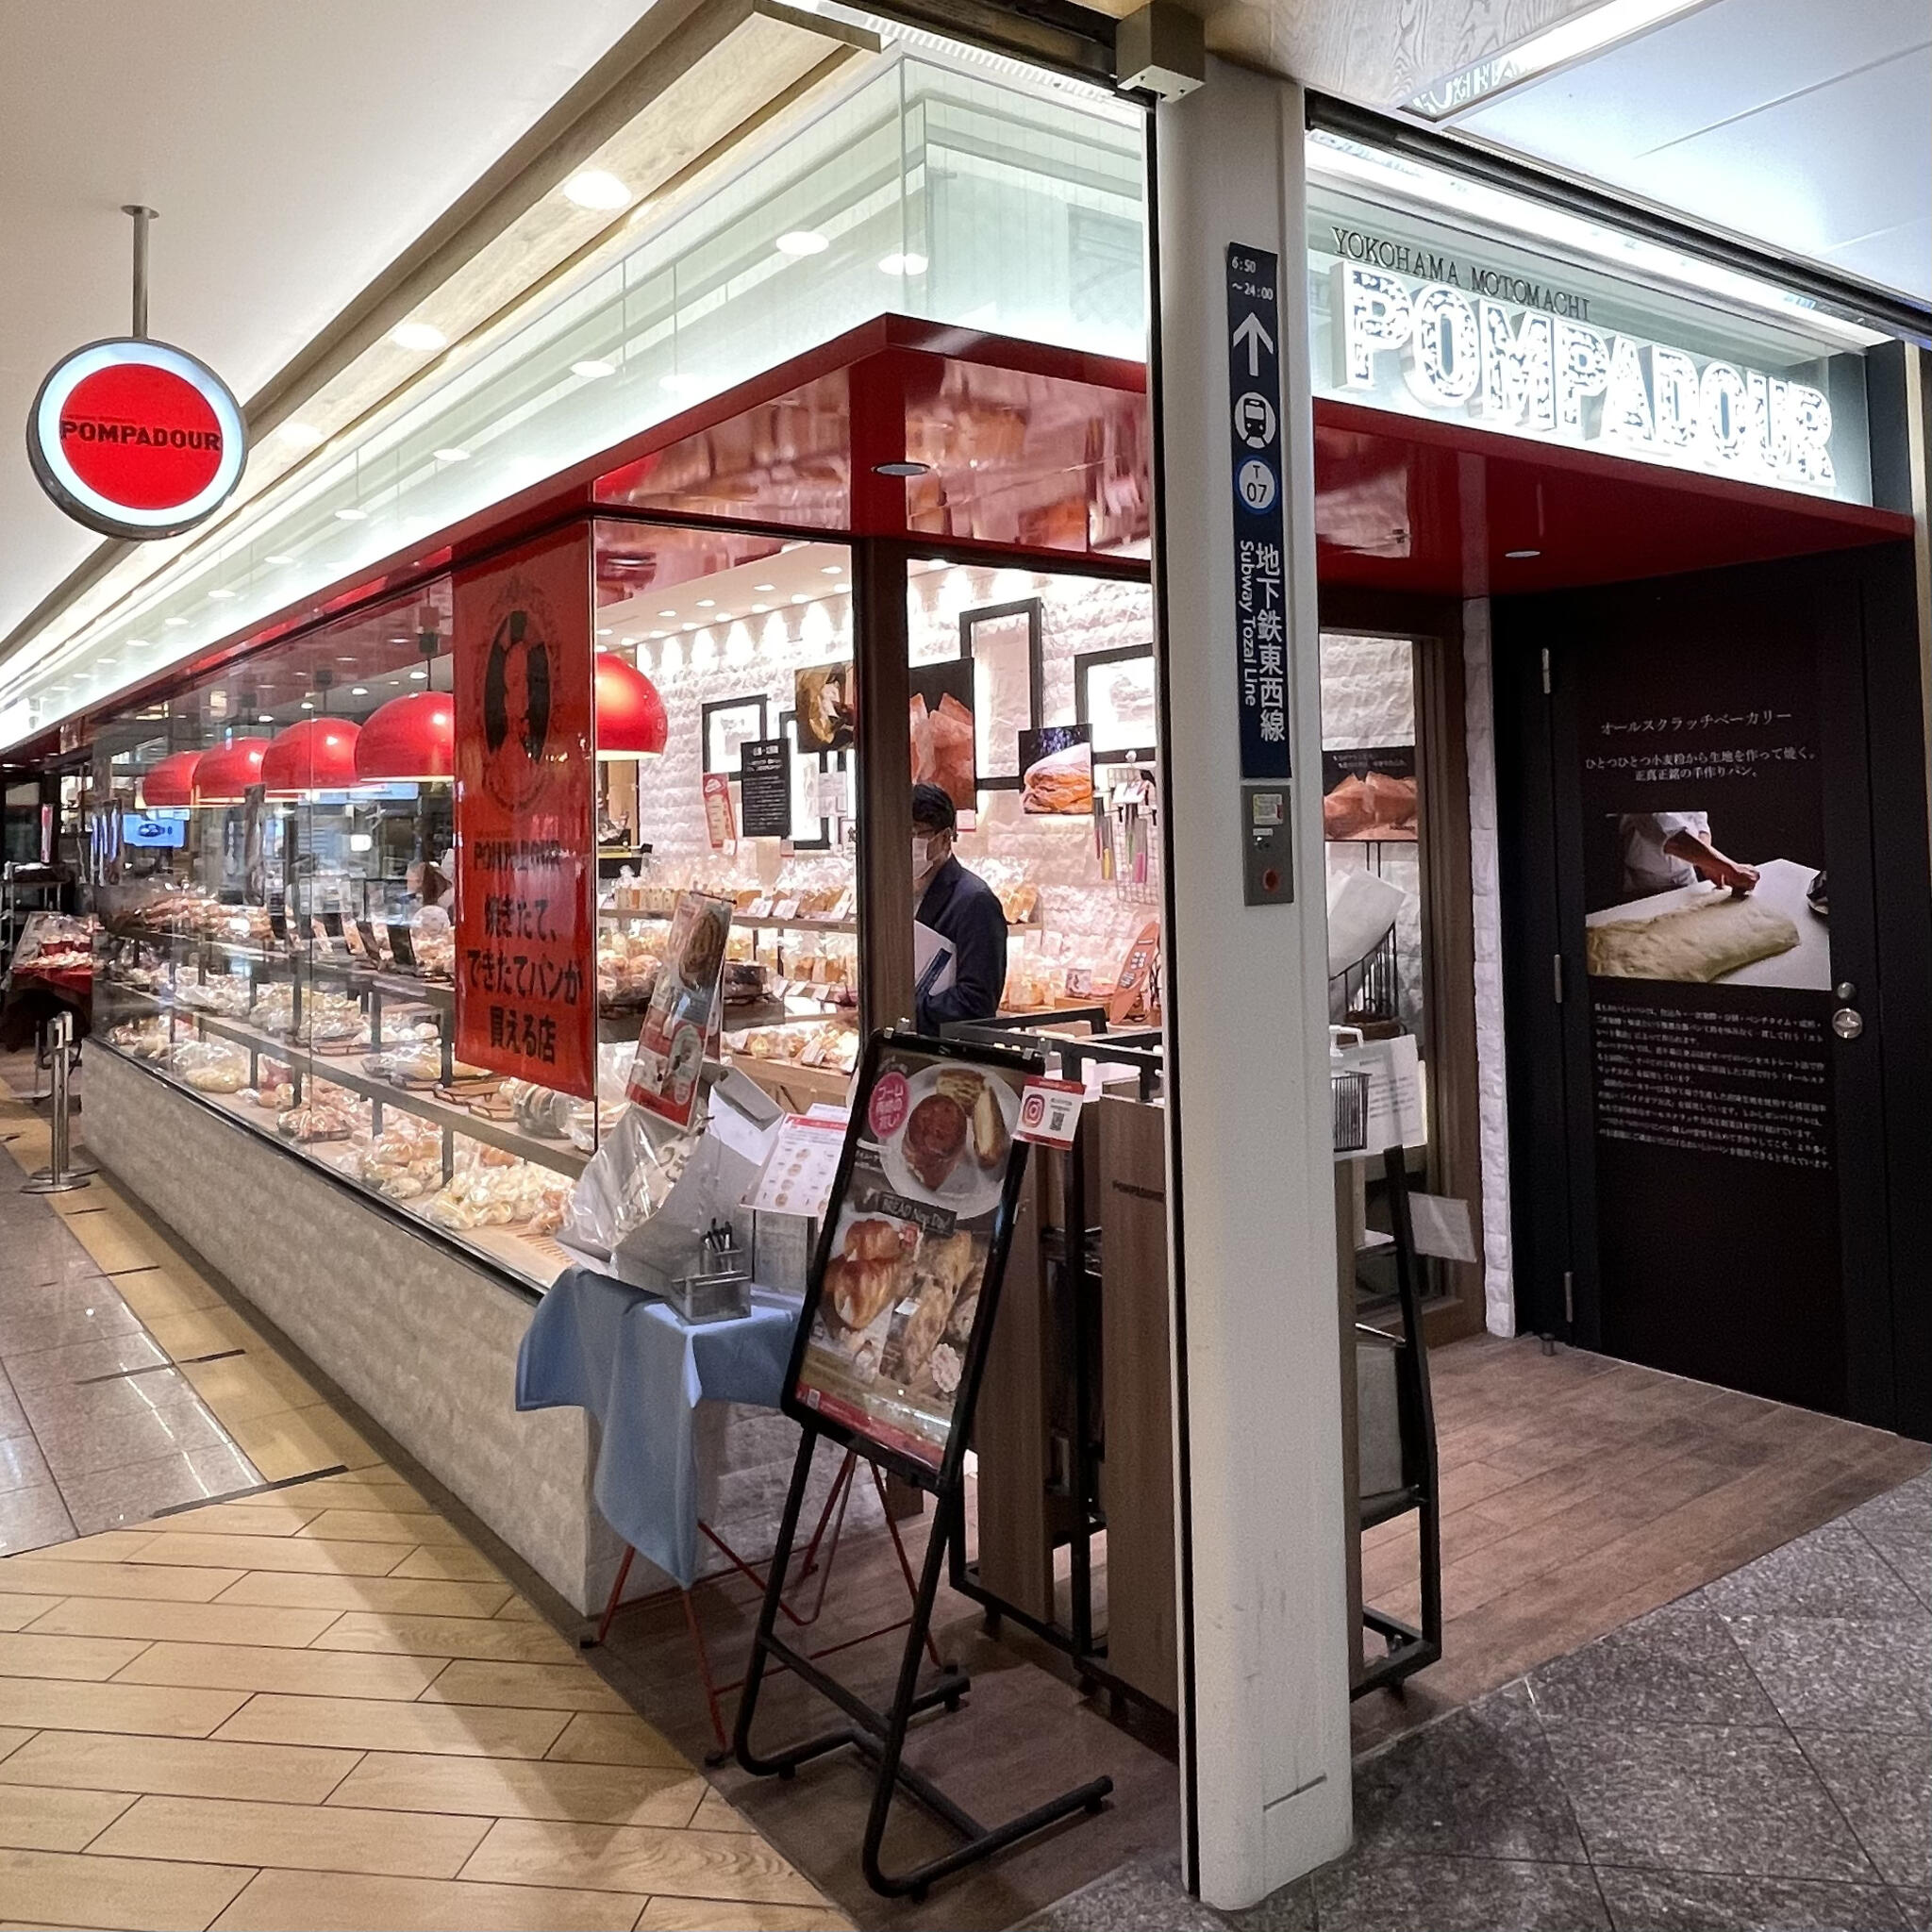 POMPADOUR 仙台駅ビル店の代表写真2